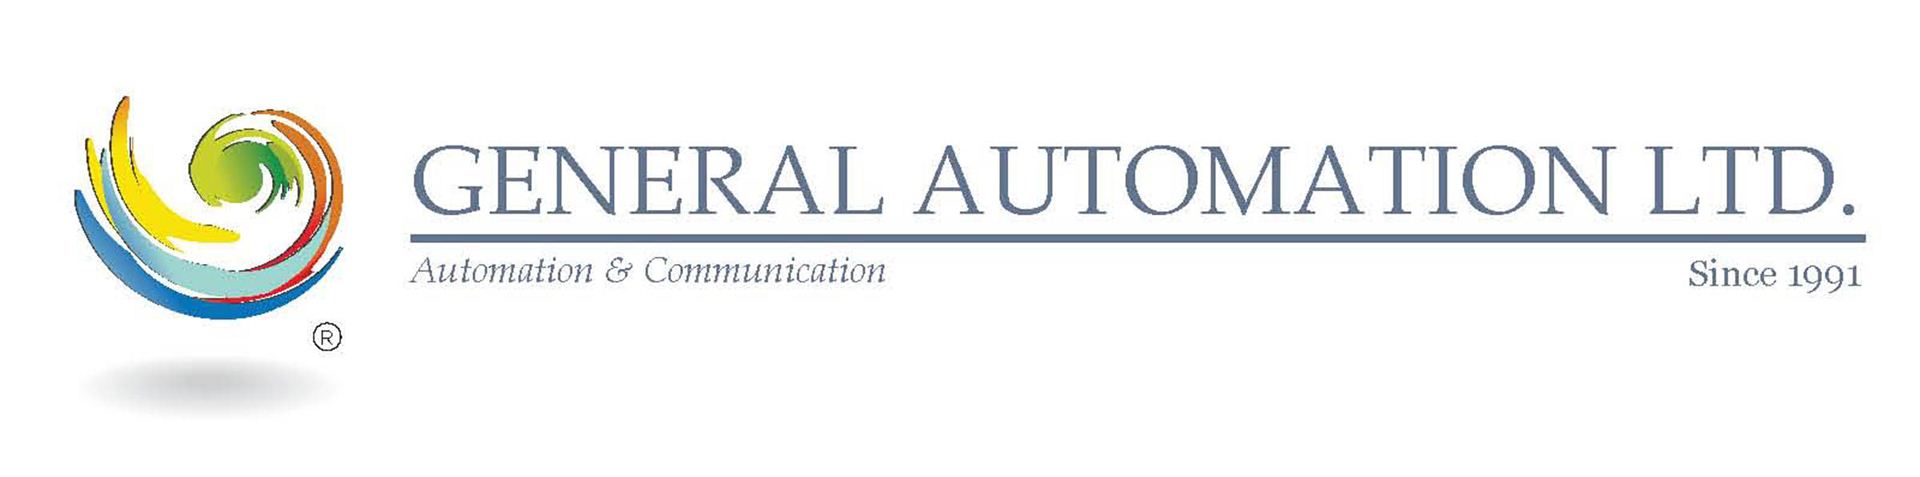 General Automation Ltd